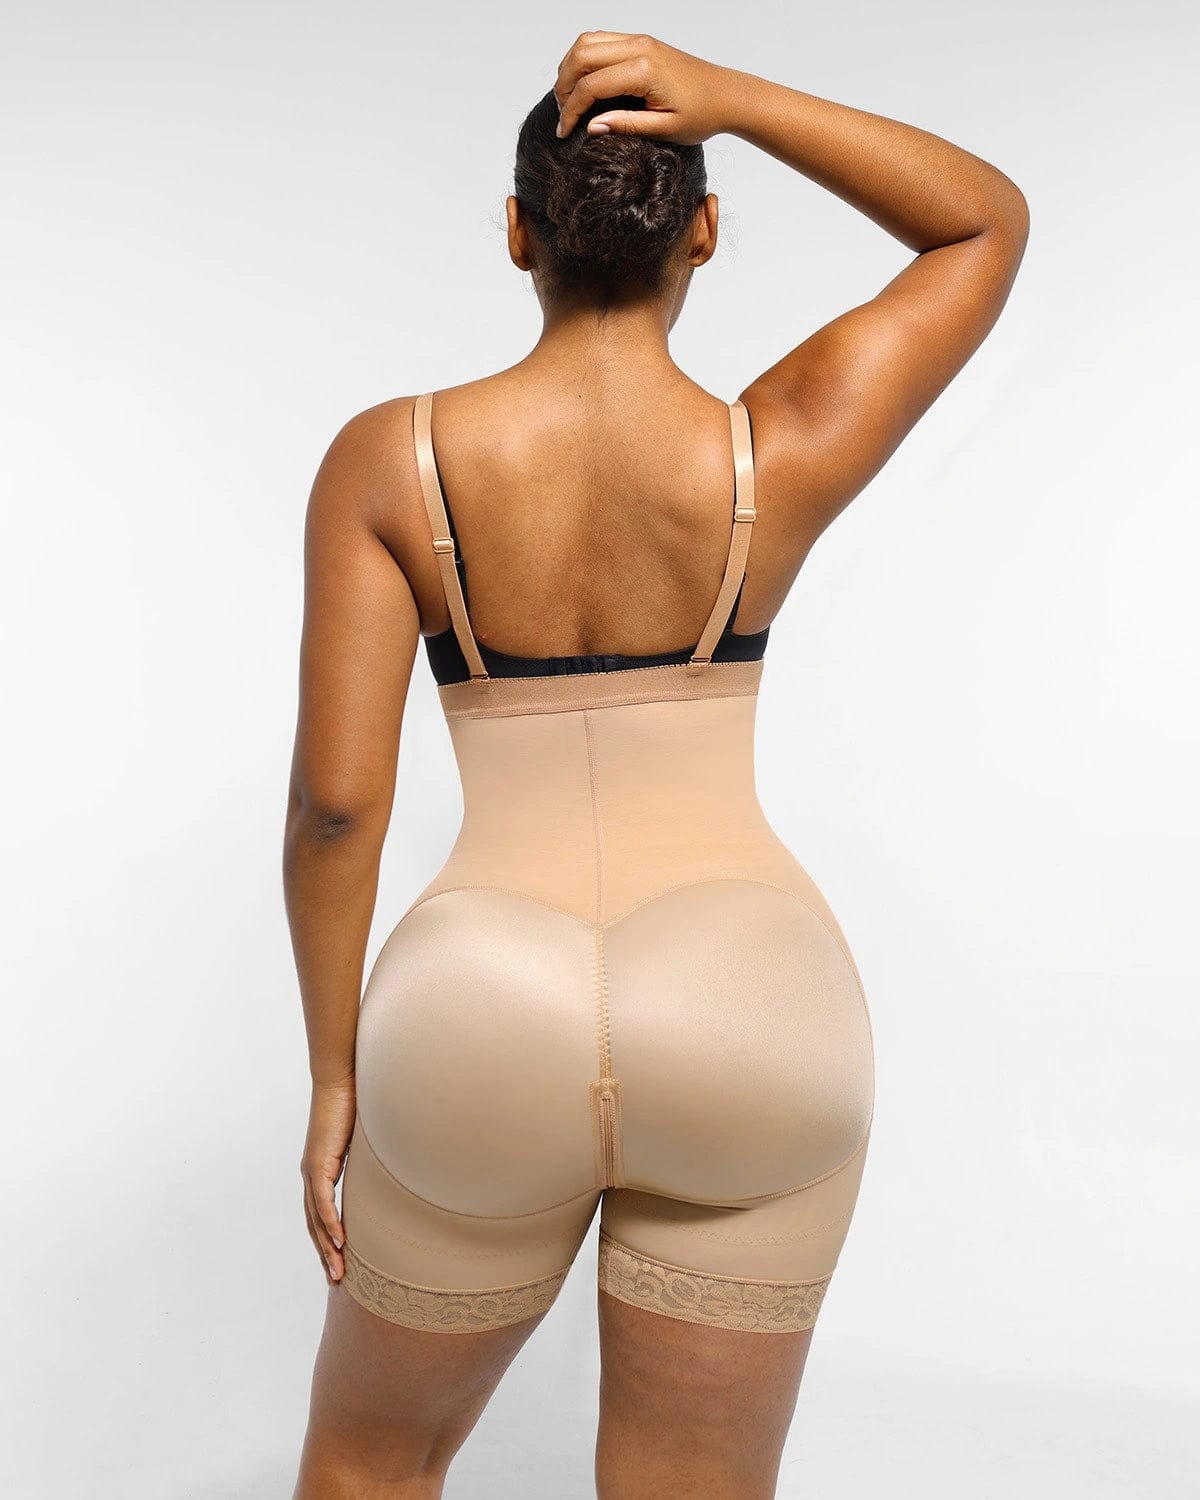 AirSlim® Firm Tummy Compression Butt Lifter